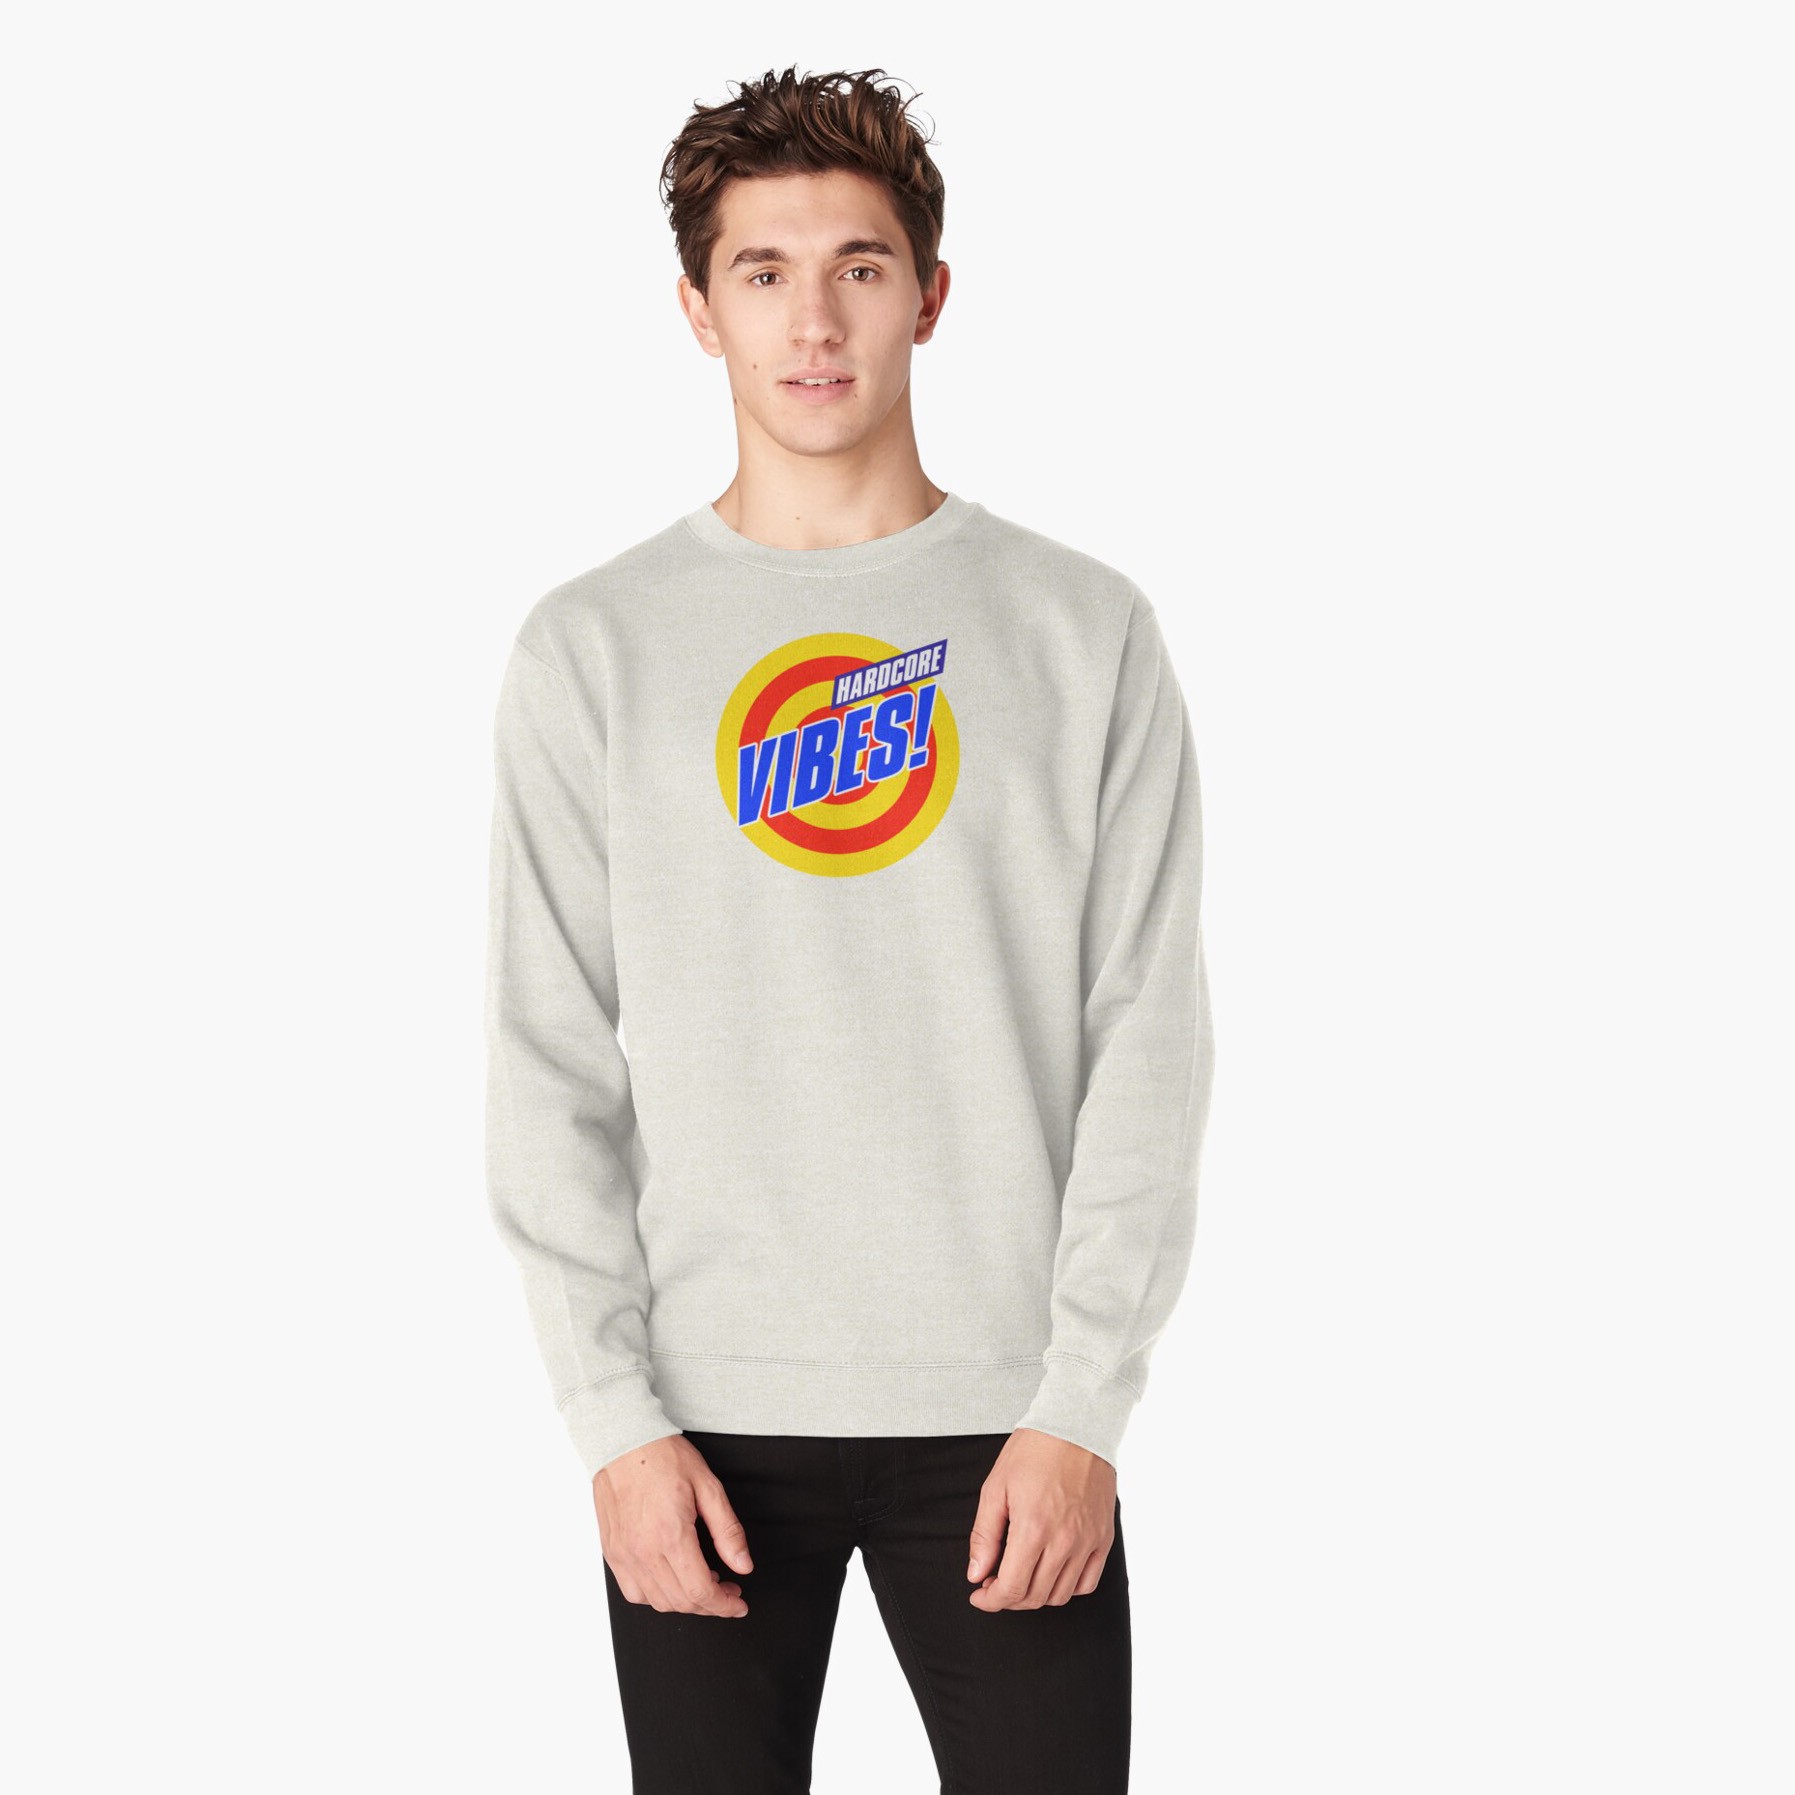 Hardcore Vibes! Old School Rave Design Pullover Sweatshirt - 